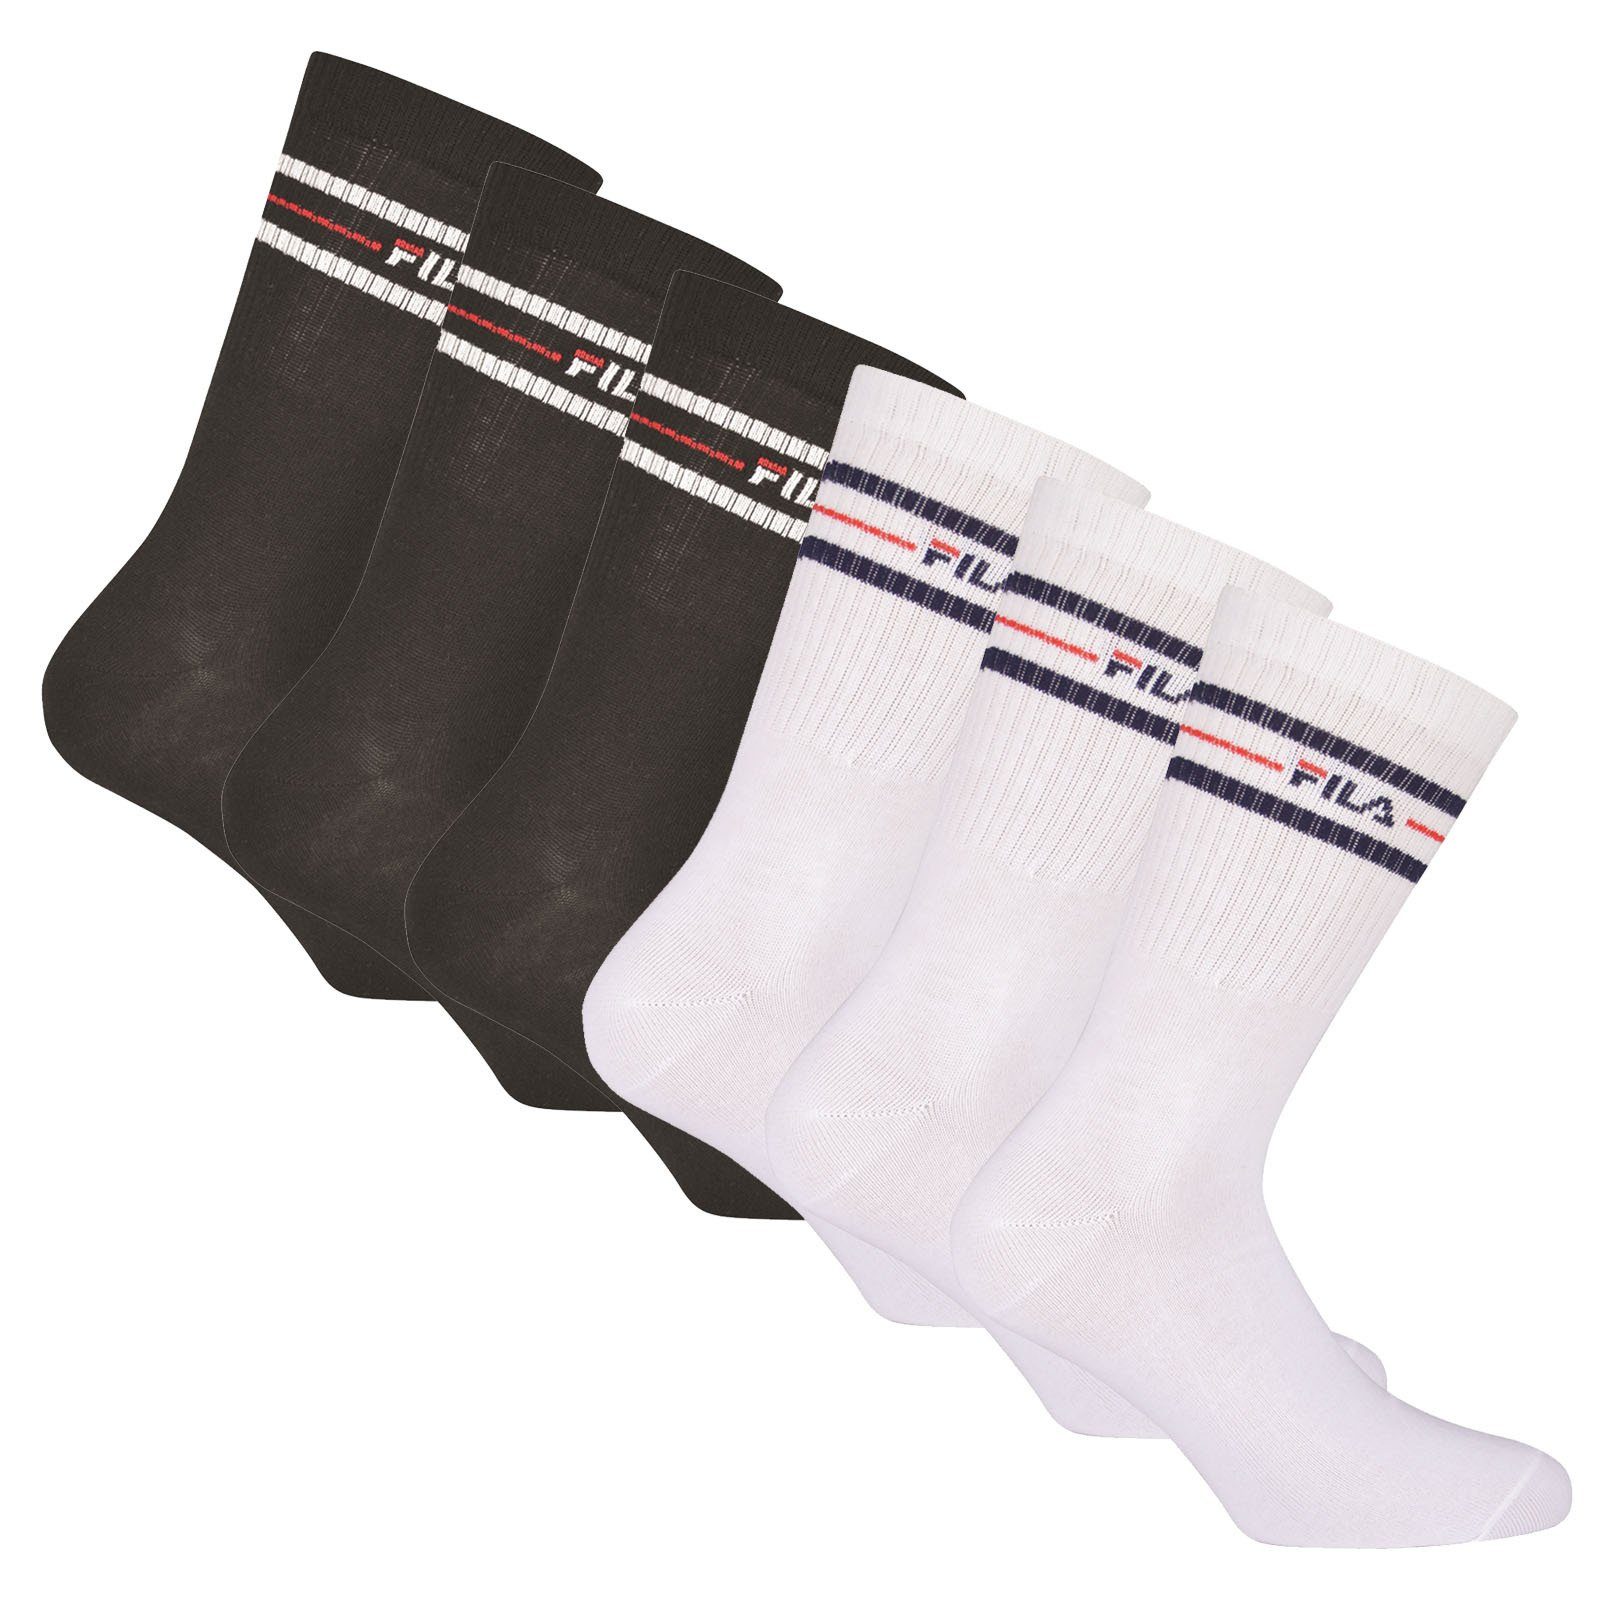 Fila Sportsocken Unisex Socken, 6er Pack - Crew Socks, Strümpfe Schwarz/Weiß